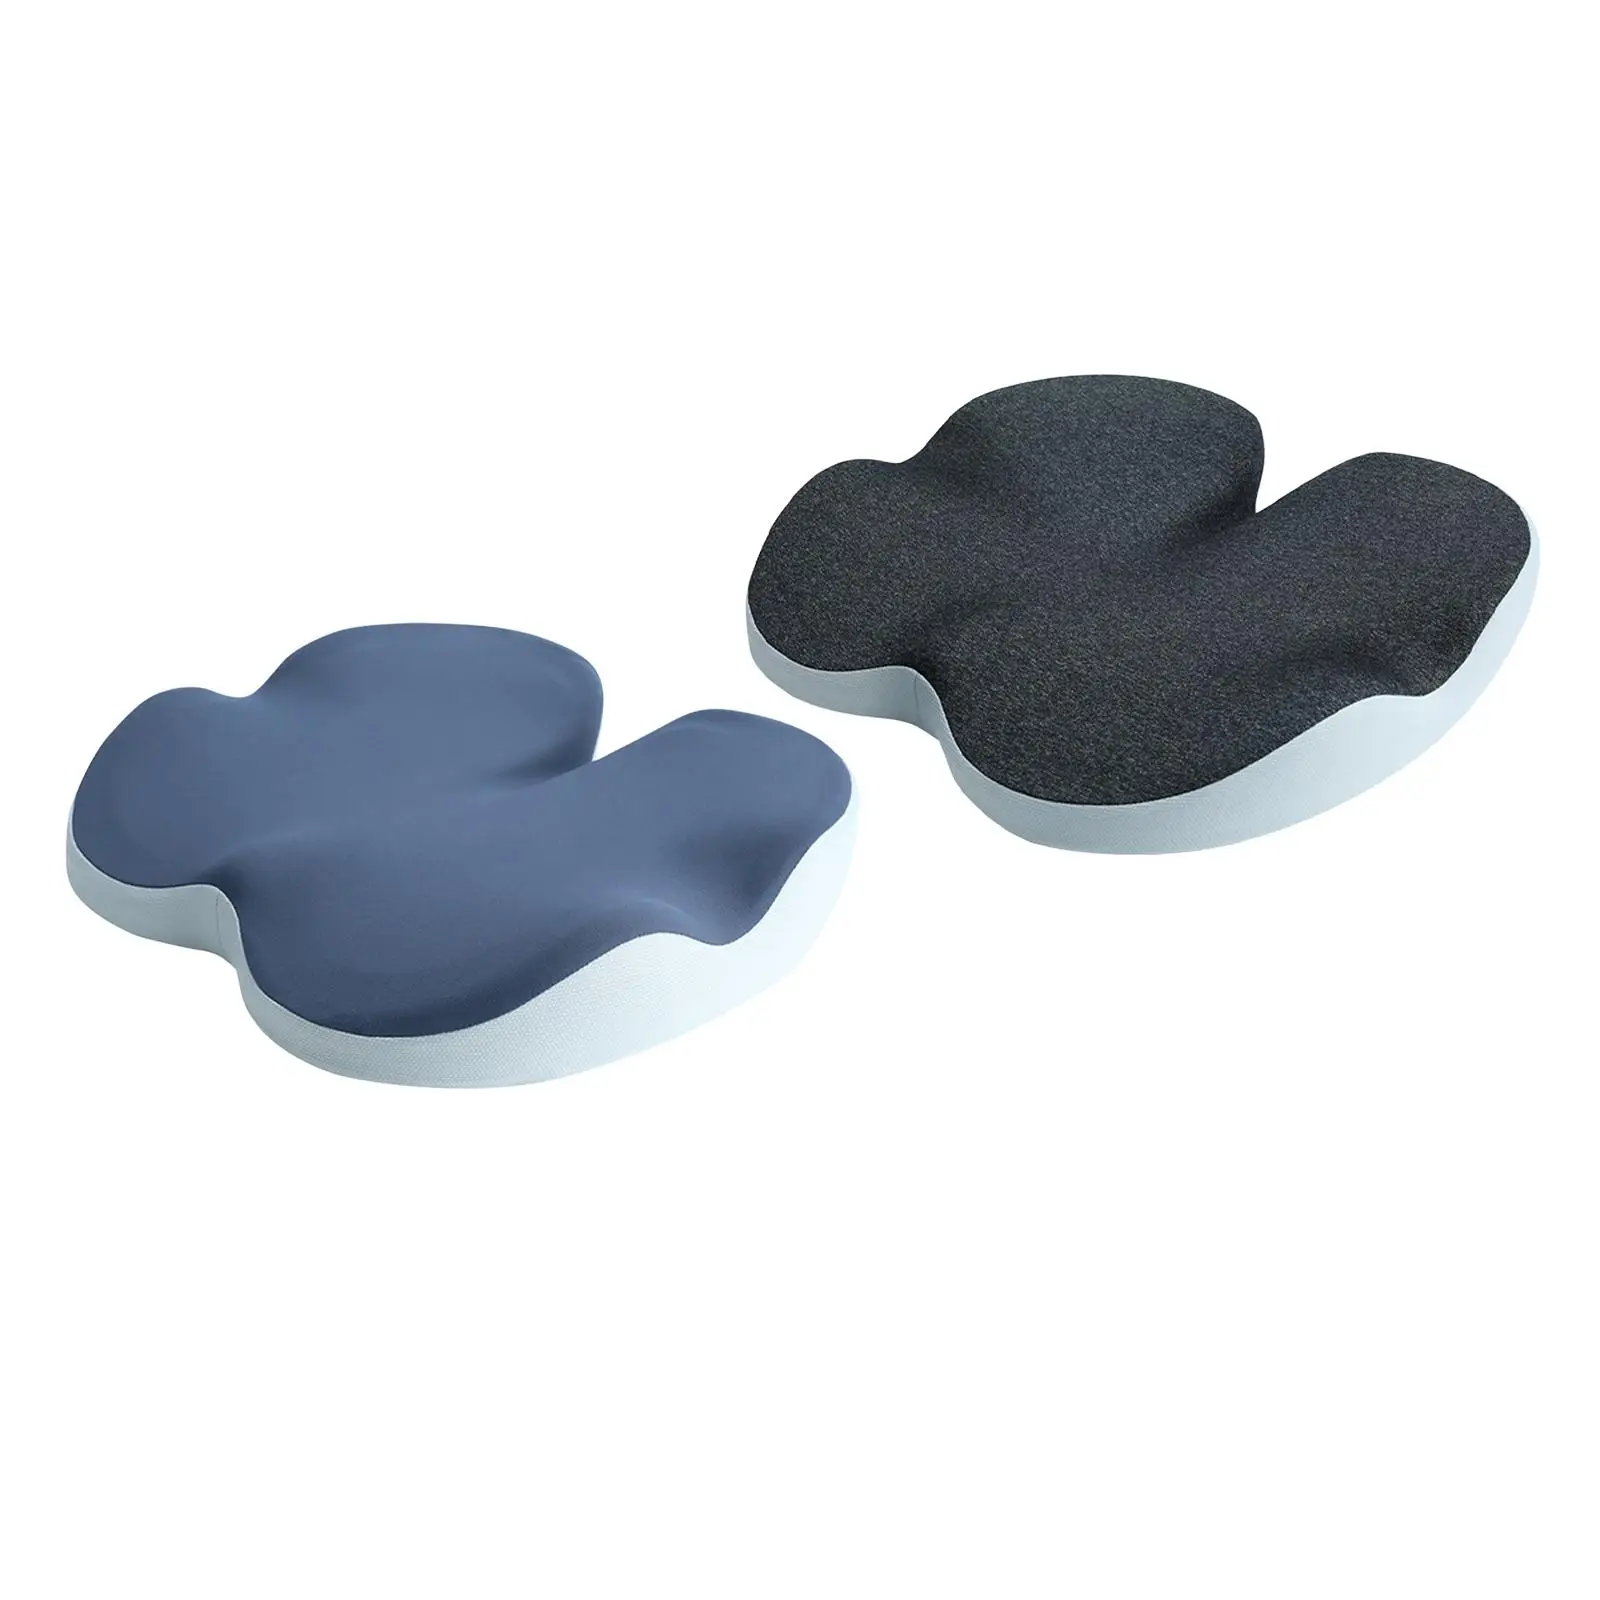 Memory Foam Seat Cushion Non Slip Washable Soft Breathable Chair Pad Ergonomic Seat Pillow Chair Cushion for Home